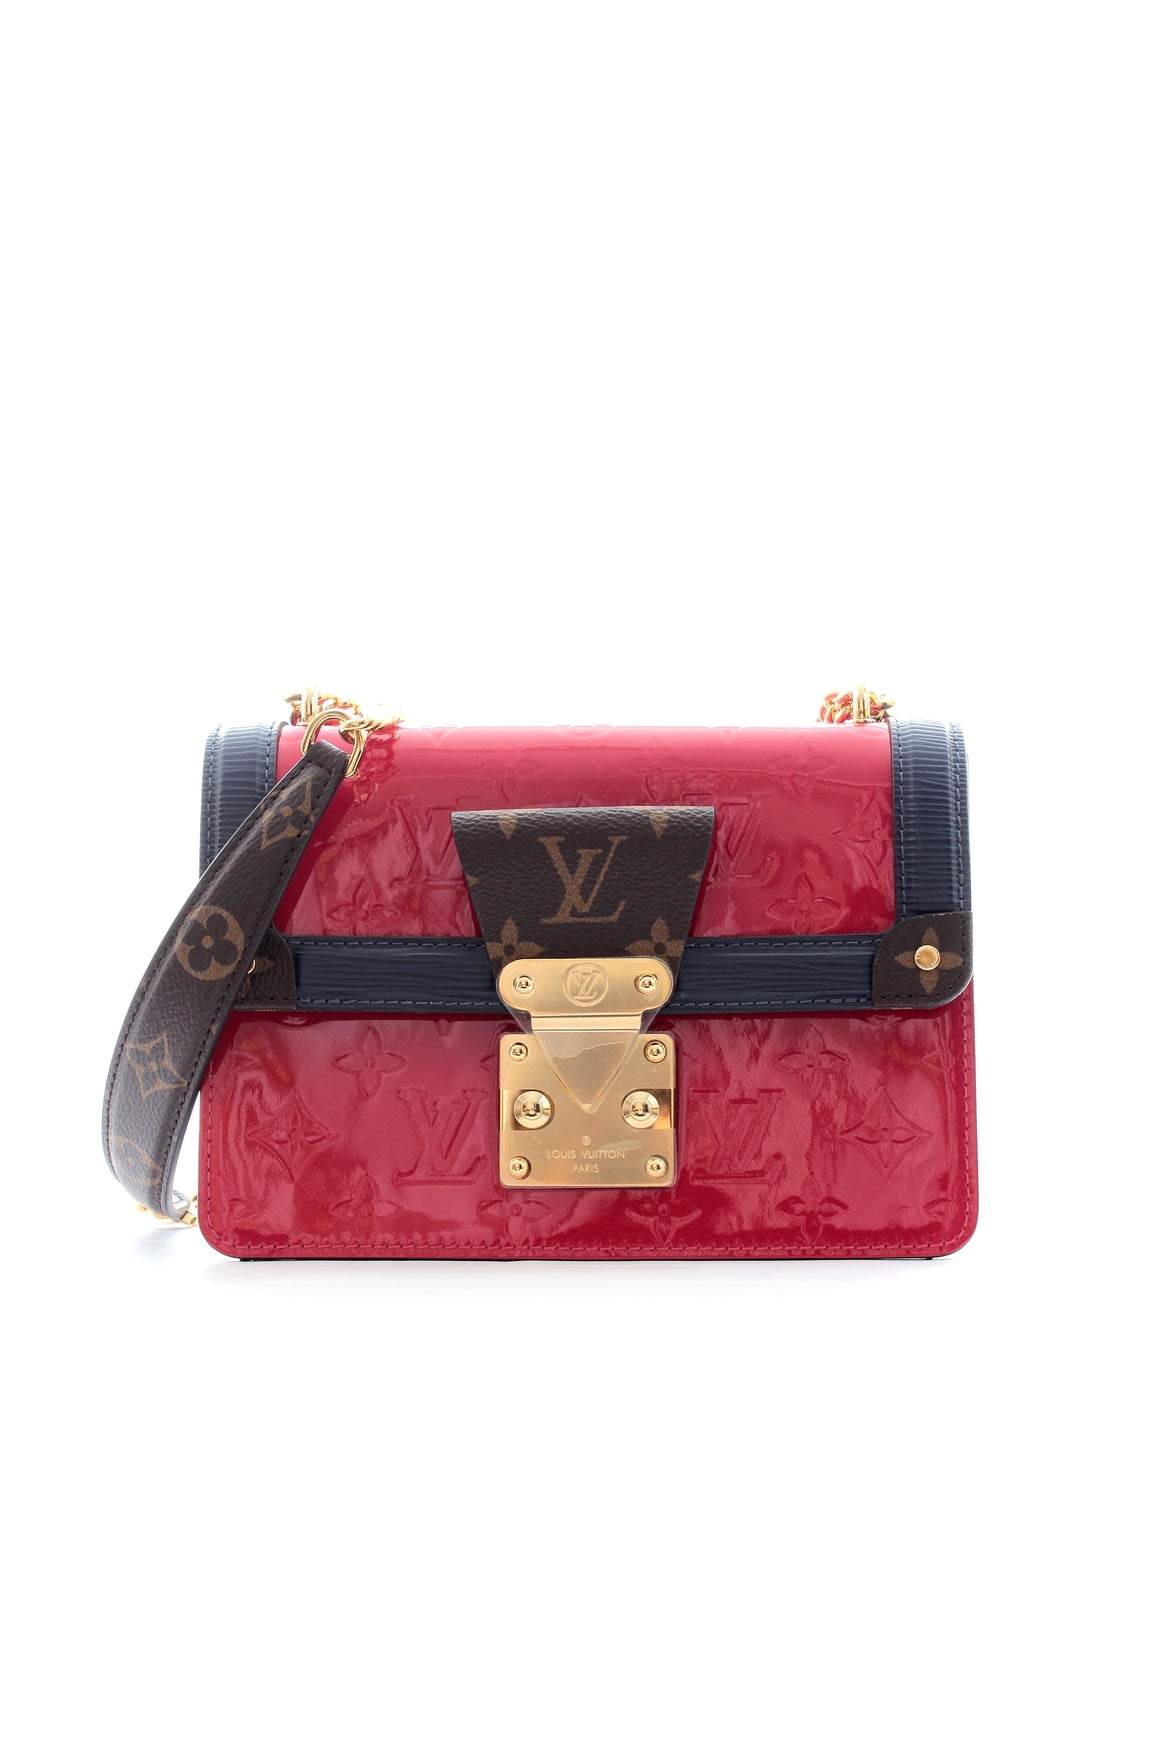 Louis Vuitton Wynwood Monogram Chain Bag - Current Season Collection